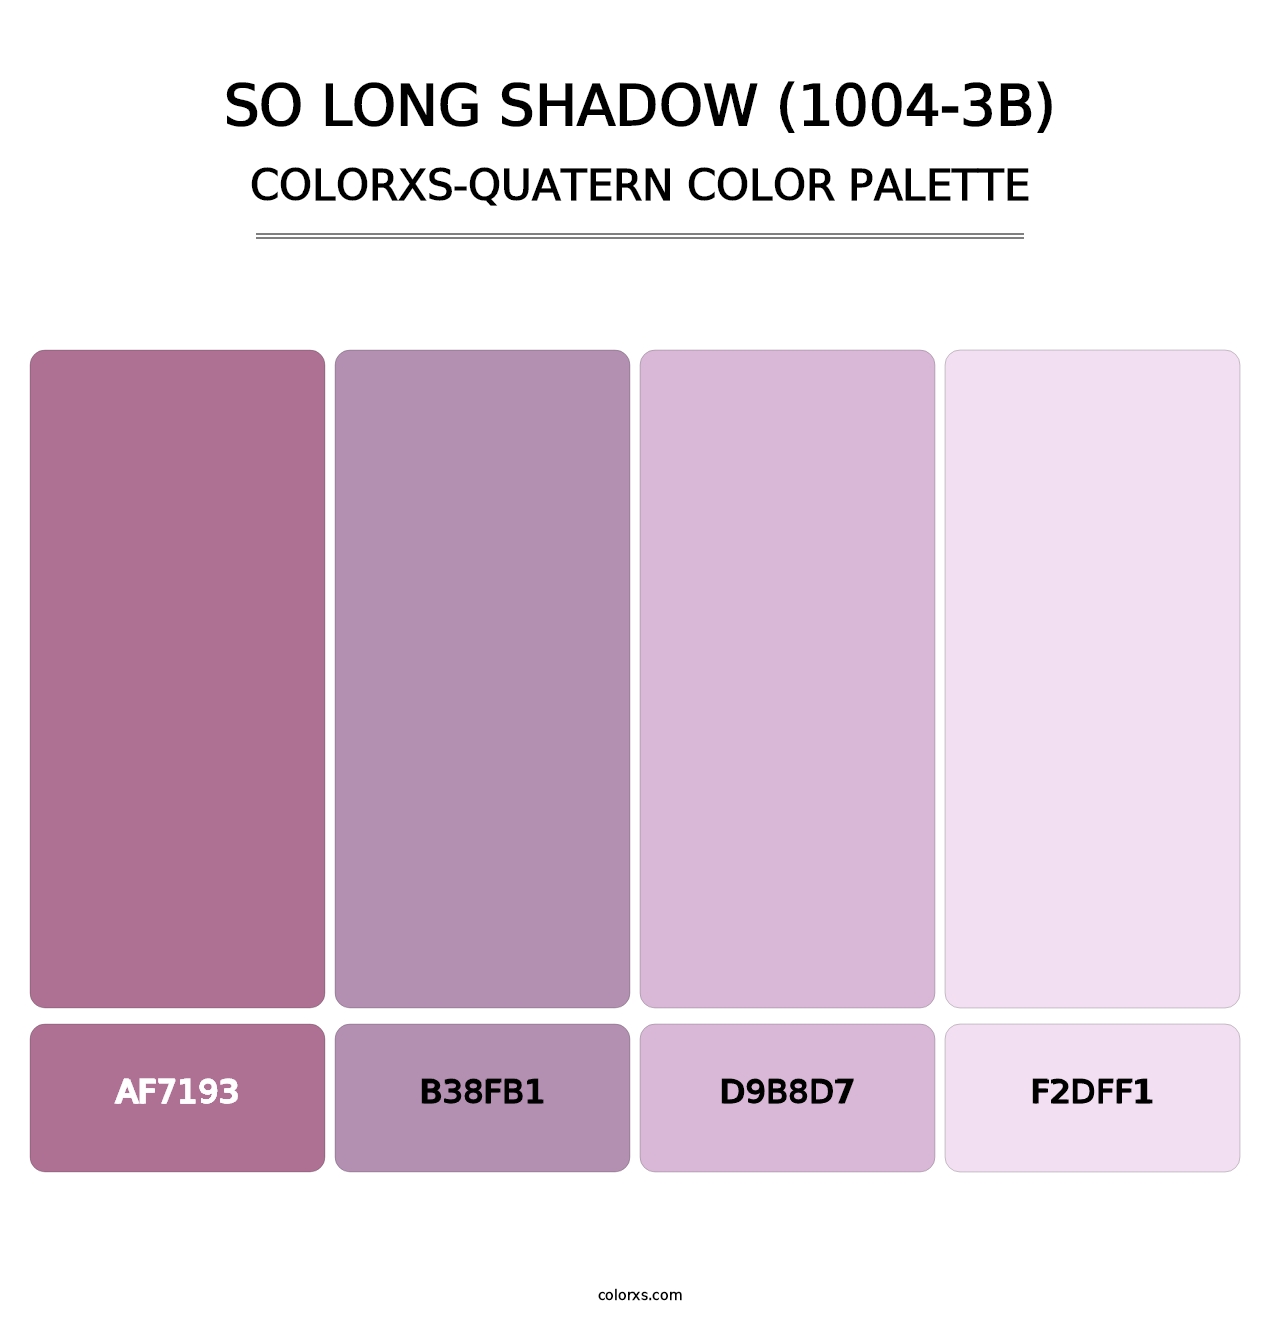 So Long Shadow (1004-3B) - Colorxs Quatern Palette